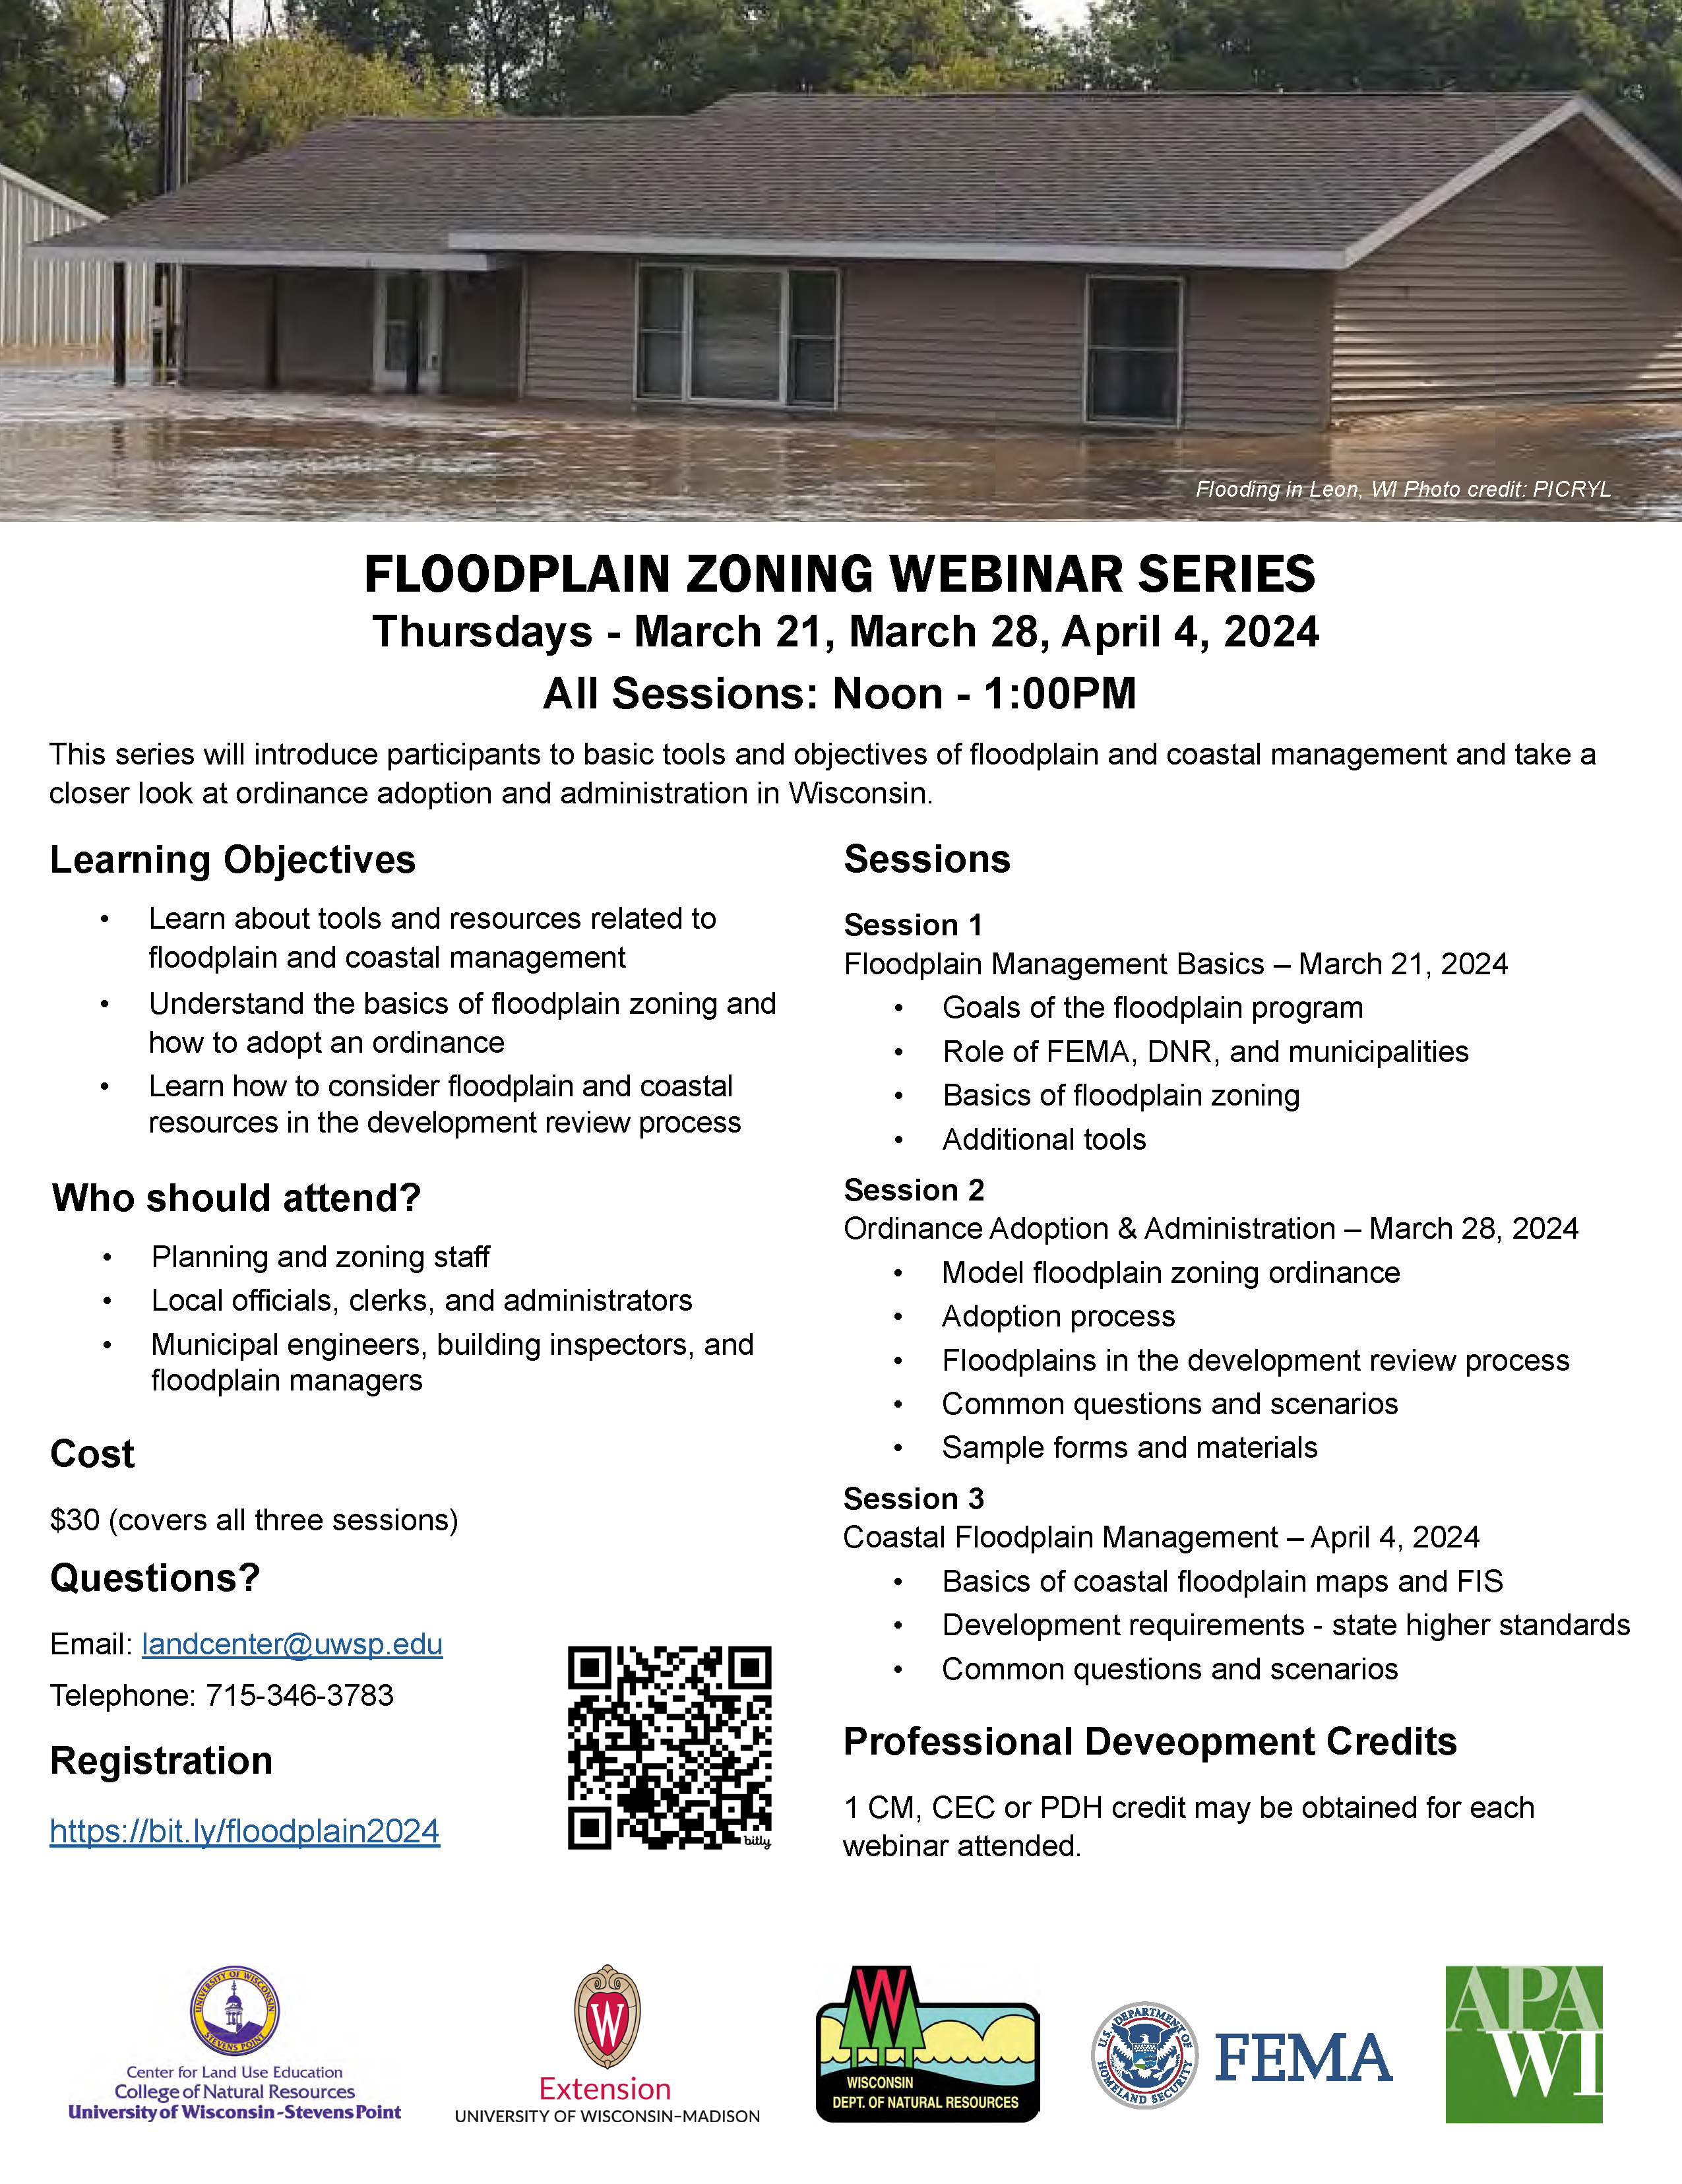 Floodplain Zoning Webinar Series